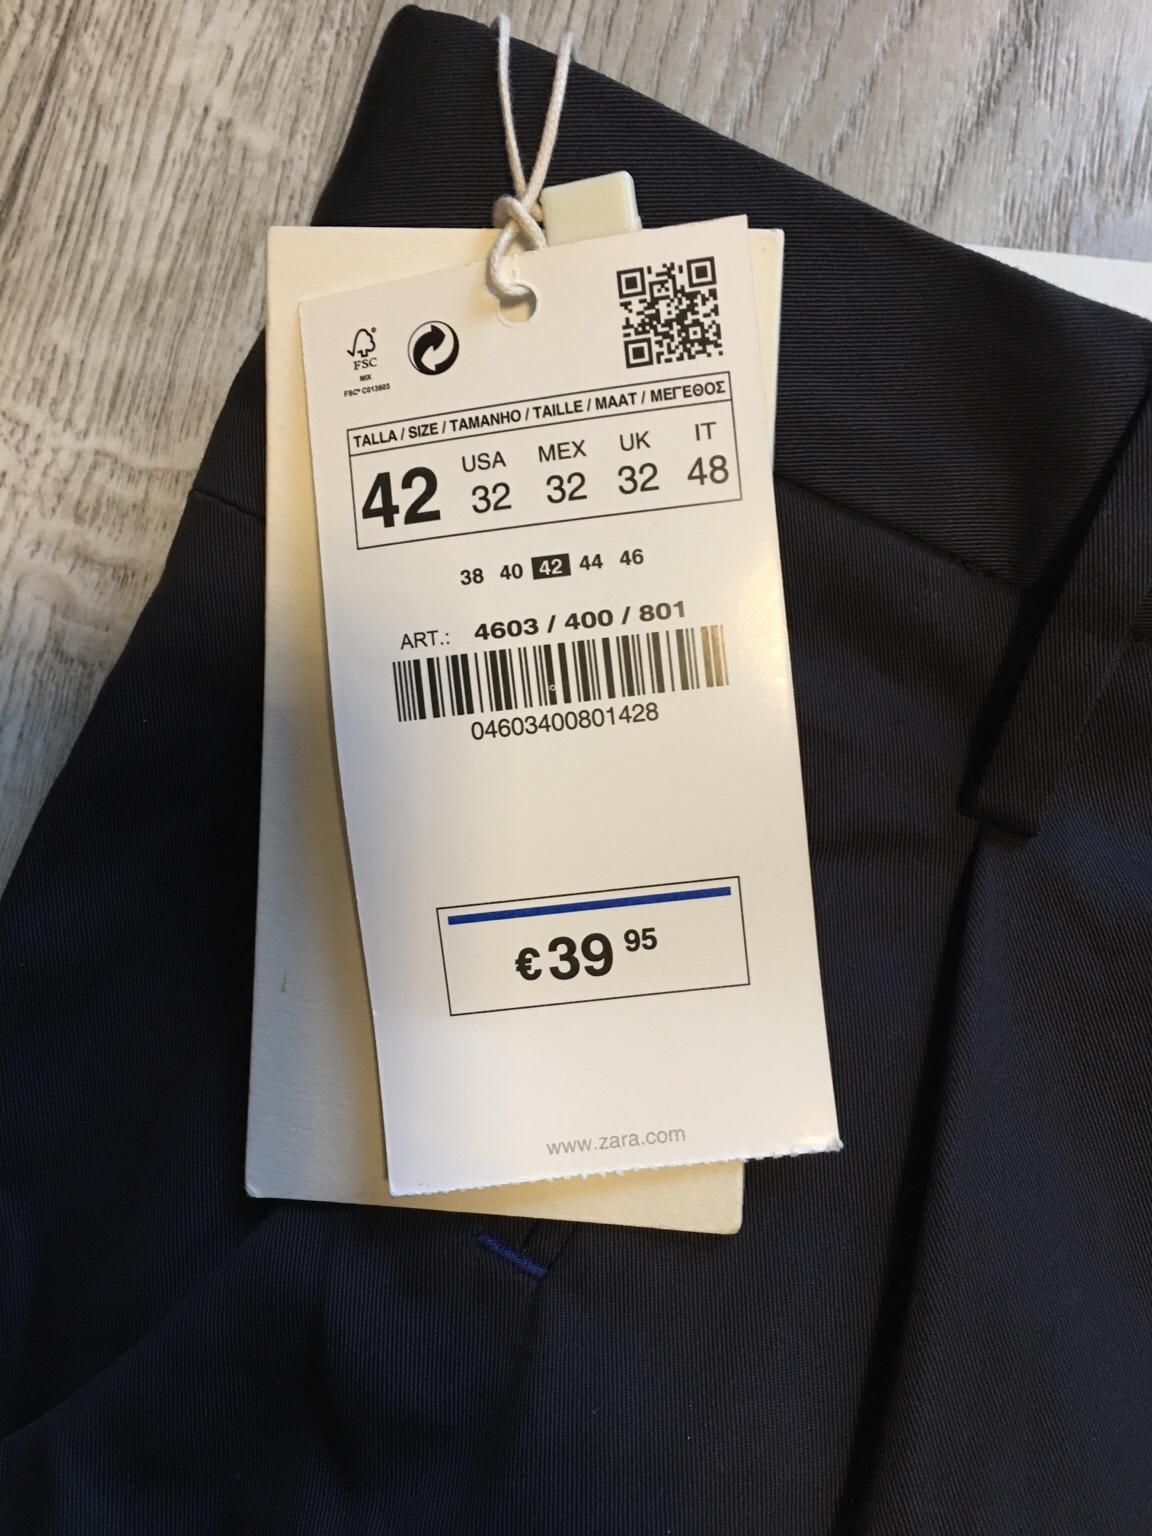 Zara man mex 32 in RM15 Ockendon for £7 